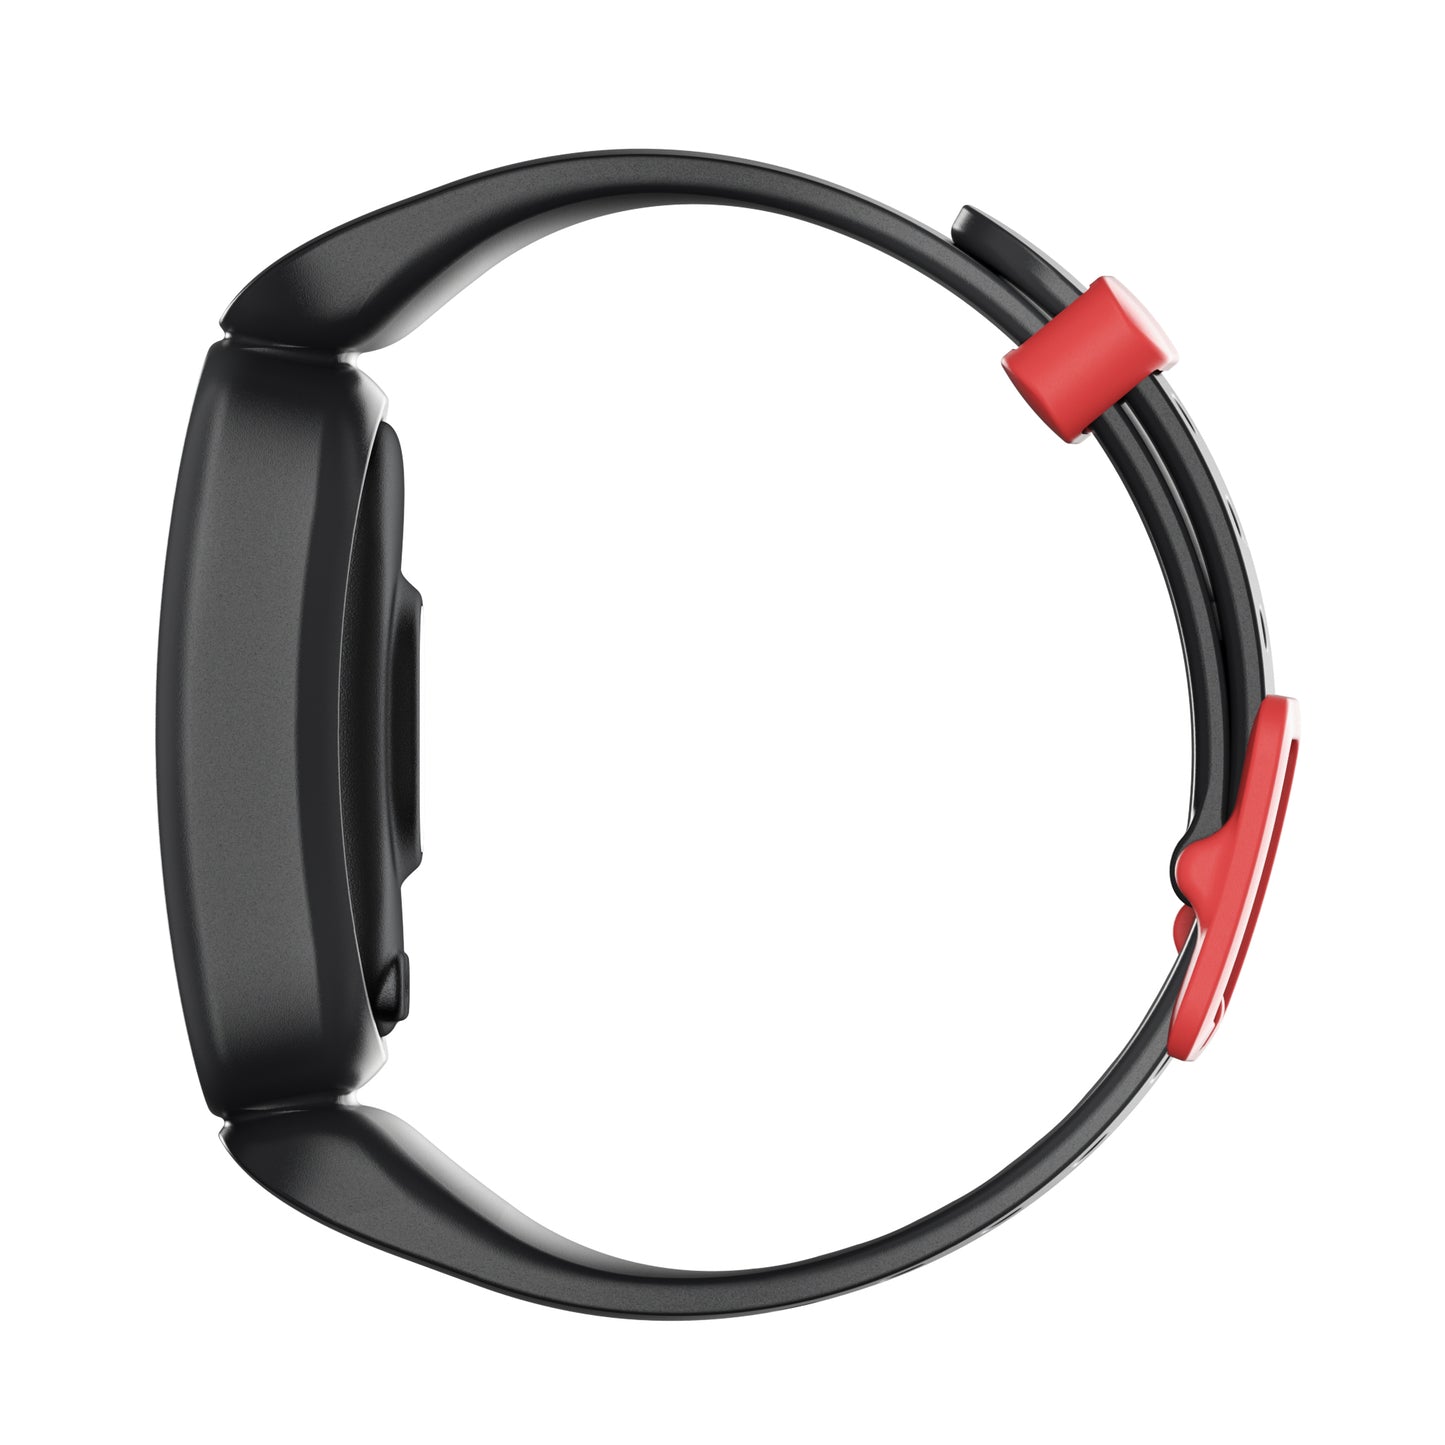 New Product S90 Smart Bracelet Children Alarm Clock Learning Heart Rate Sleep Monitoring Bluetooth Sports Pedometer Bracelet